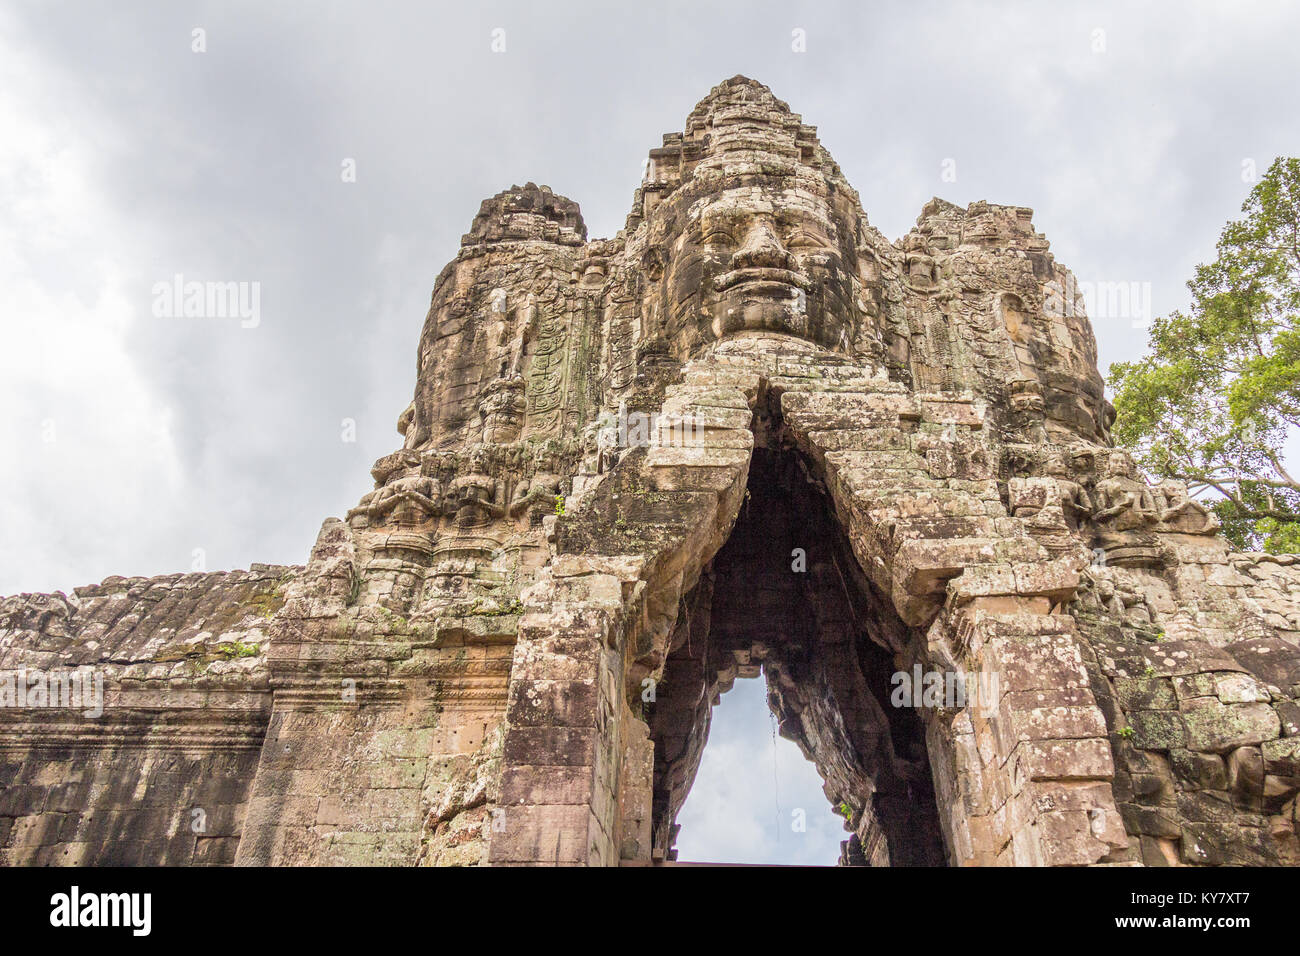 Entrance of Angkor Thom in Cambodia Stock Photo